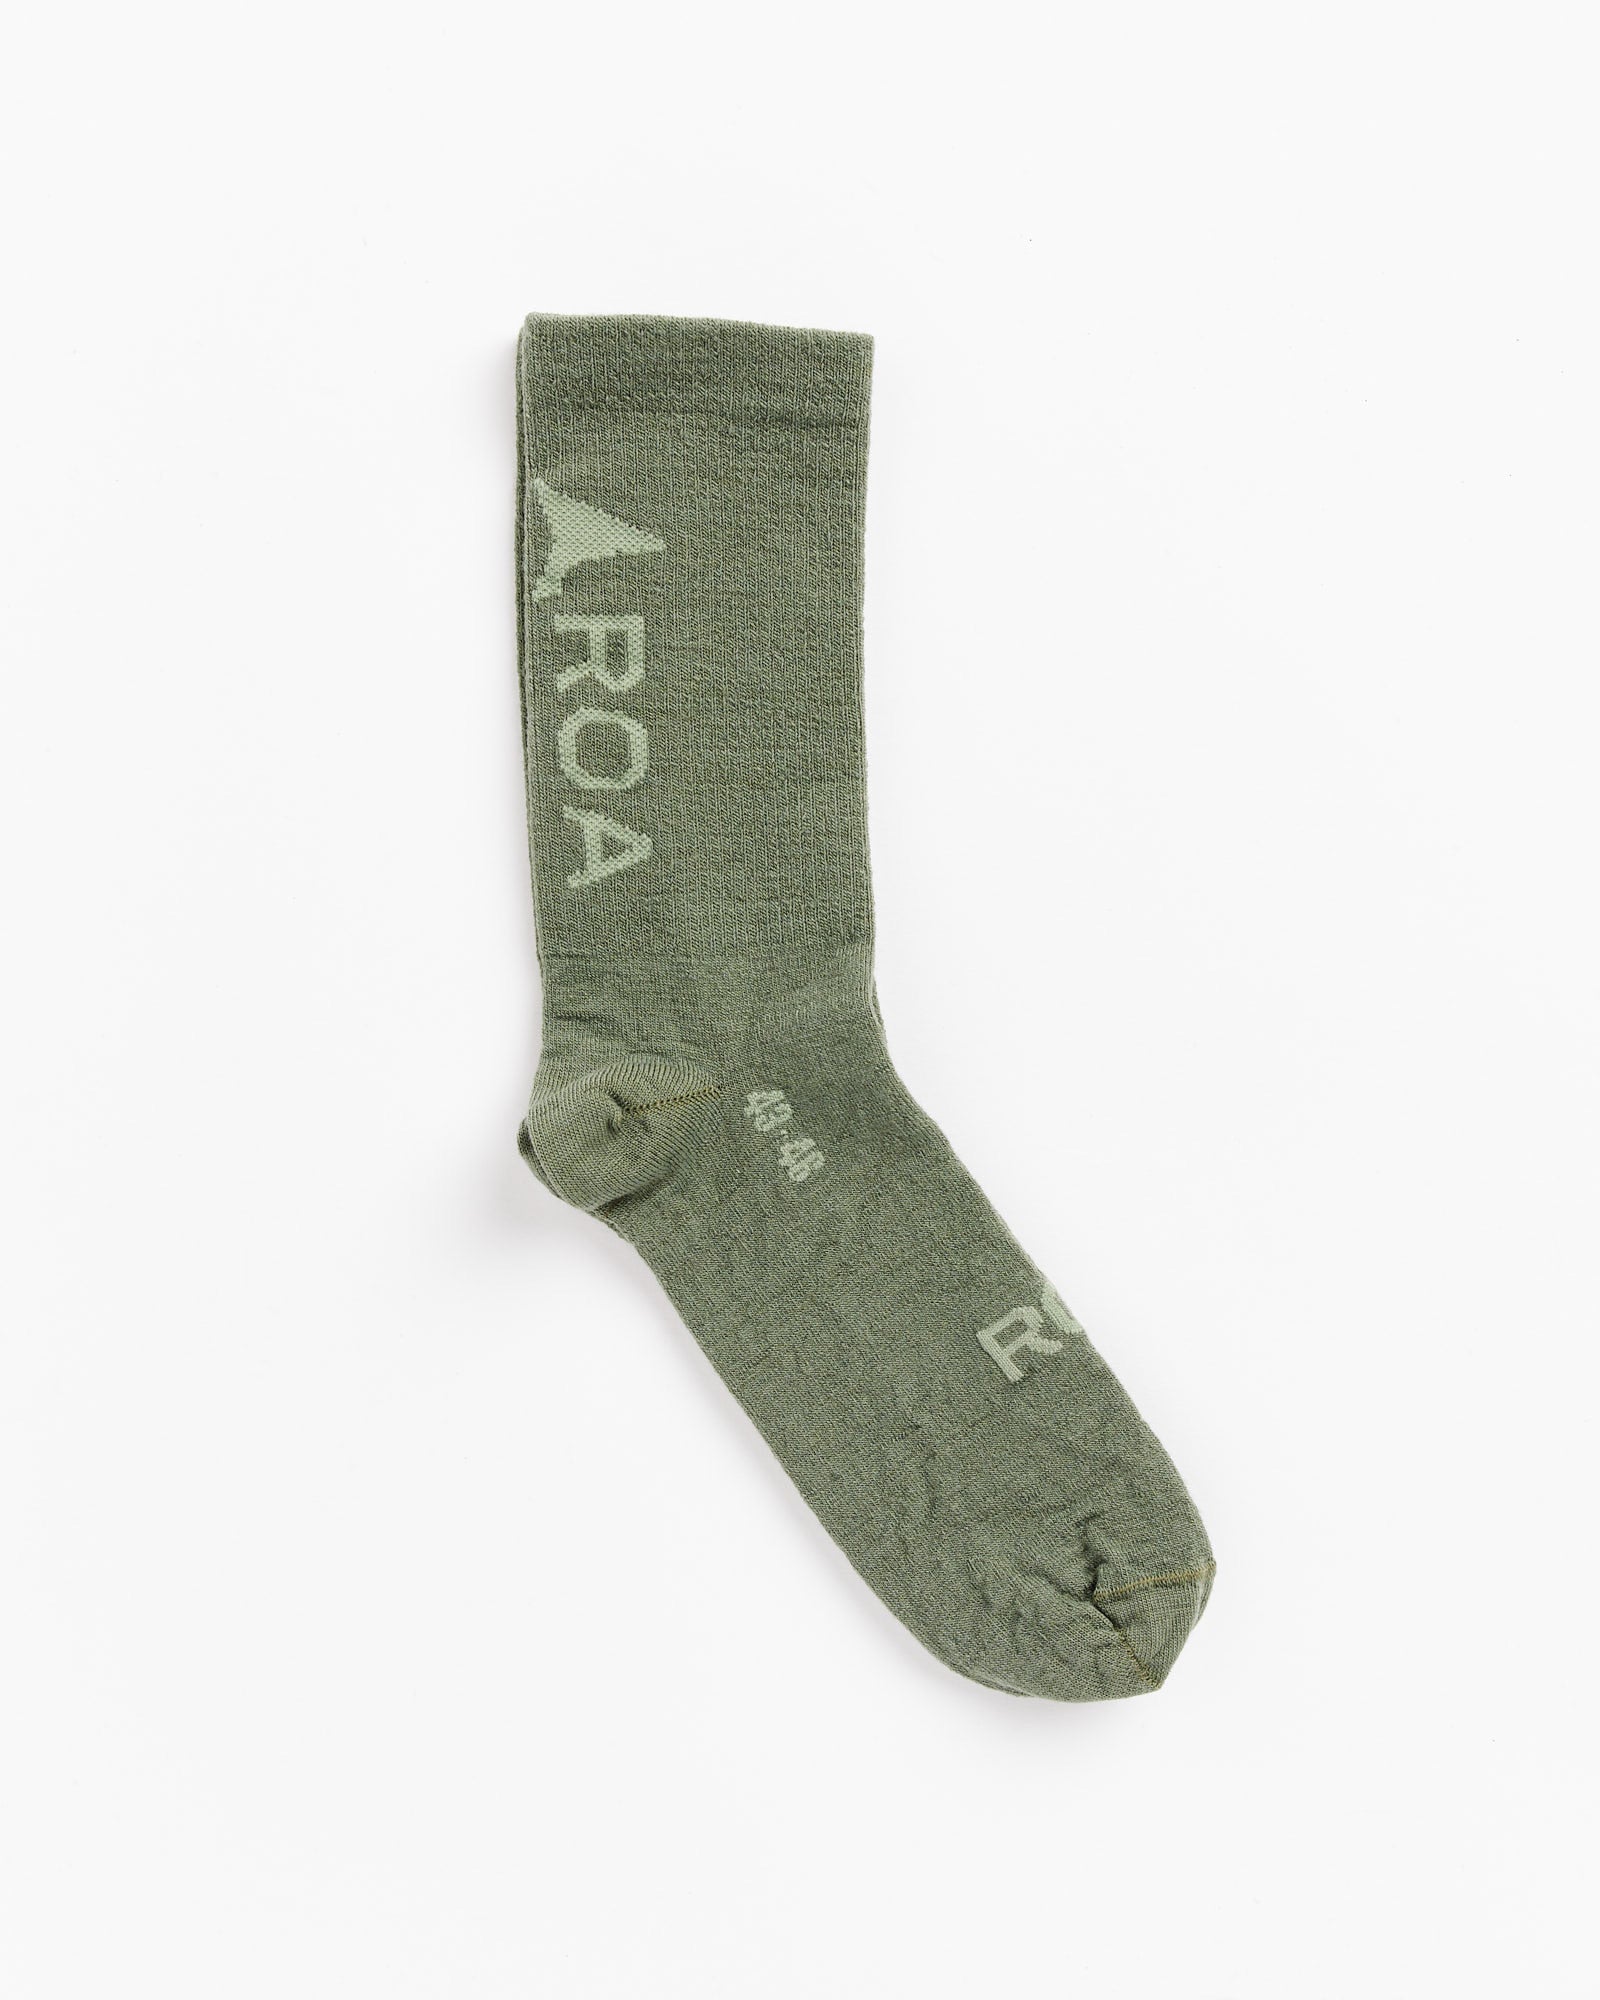 Merino Wool Socks in Sage Green